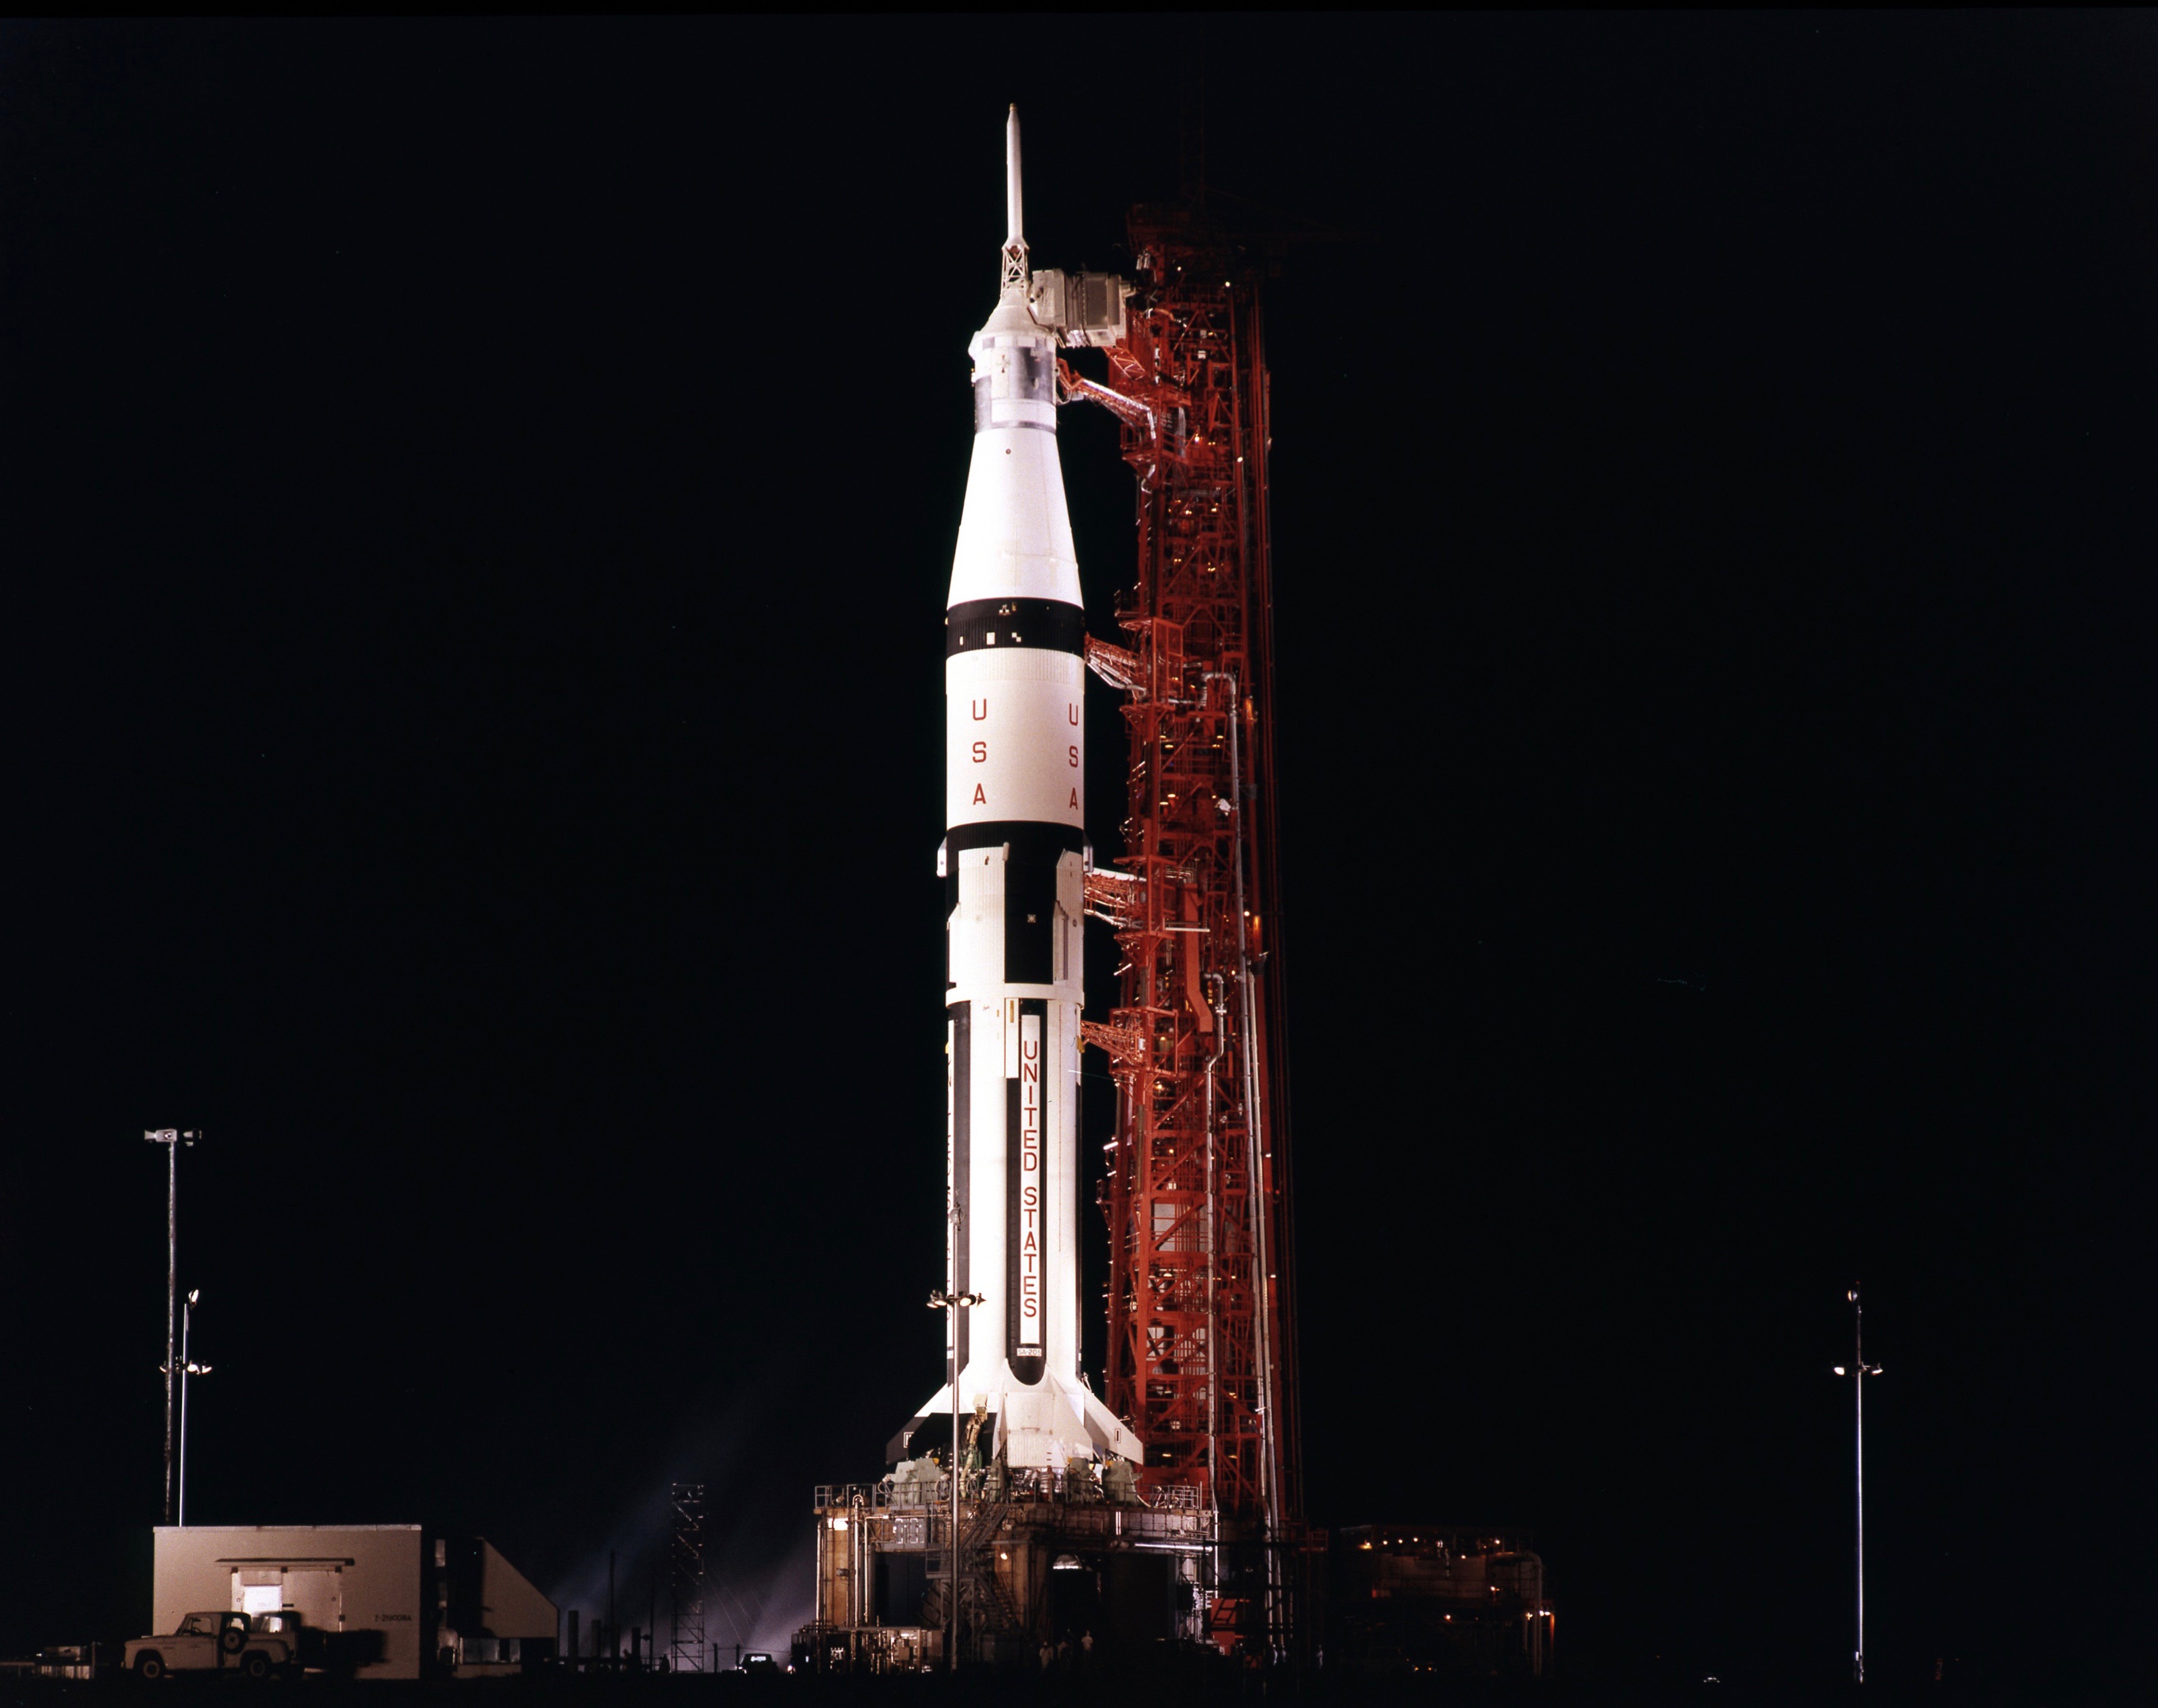 Saturn 5 Apollo 11